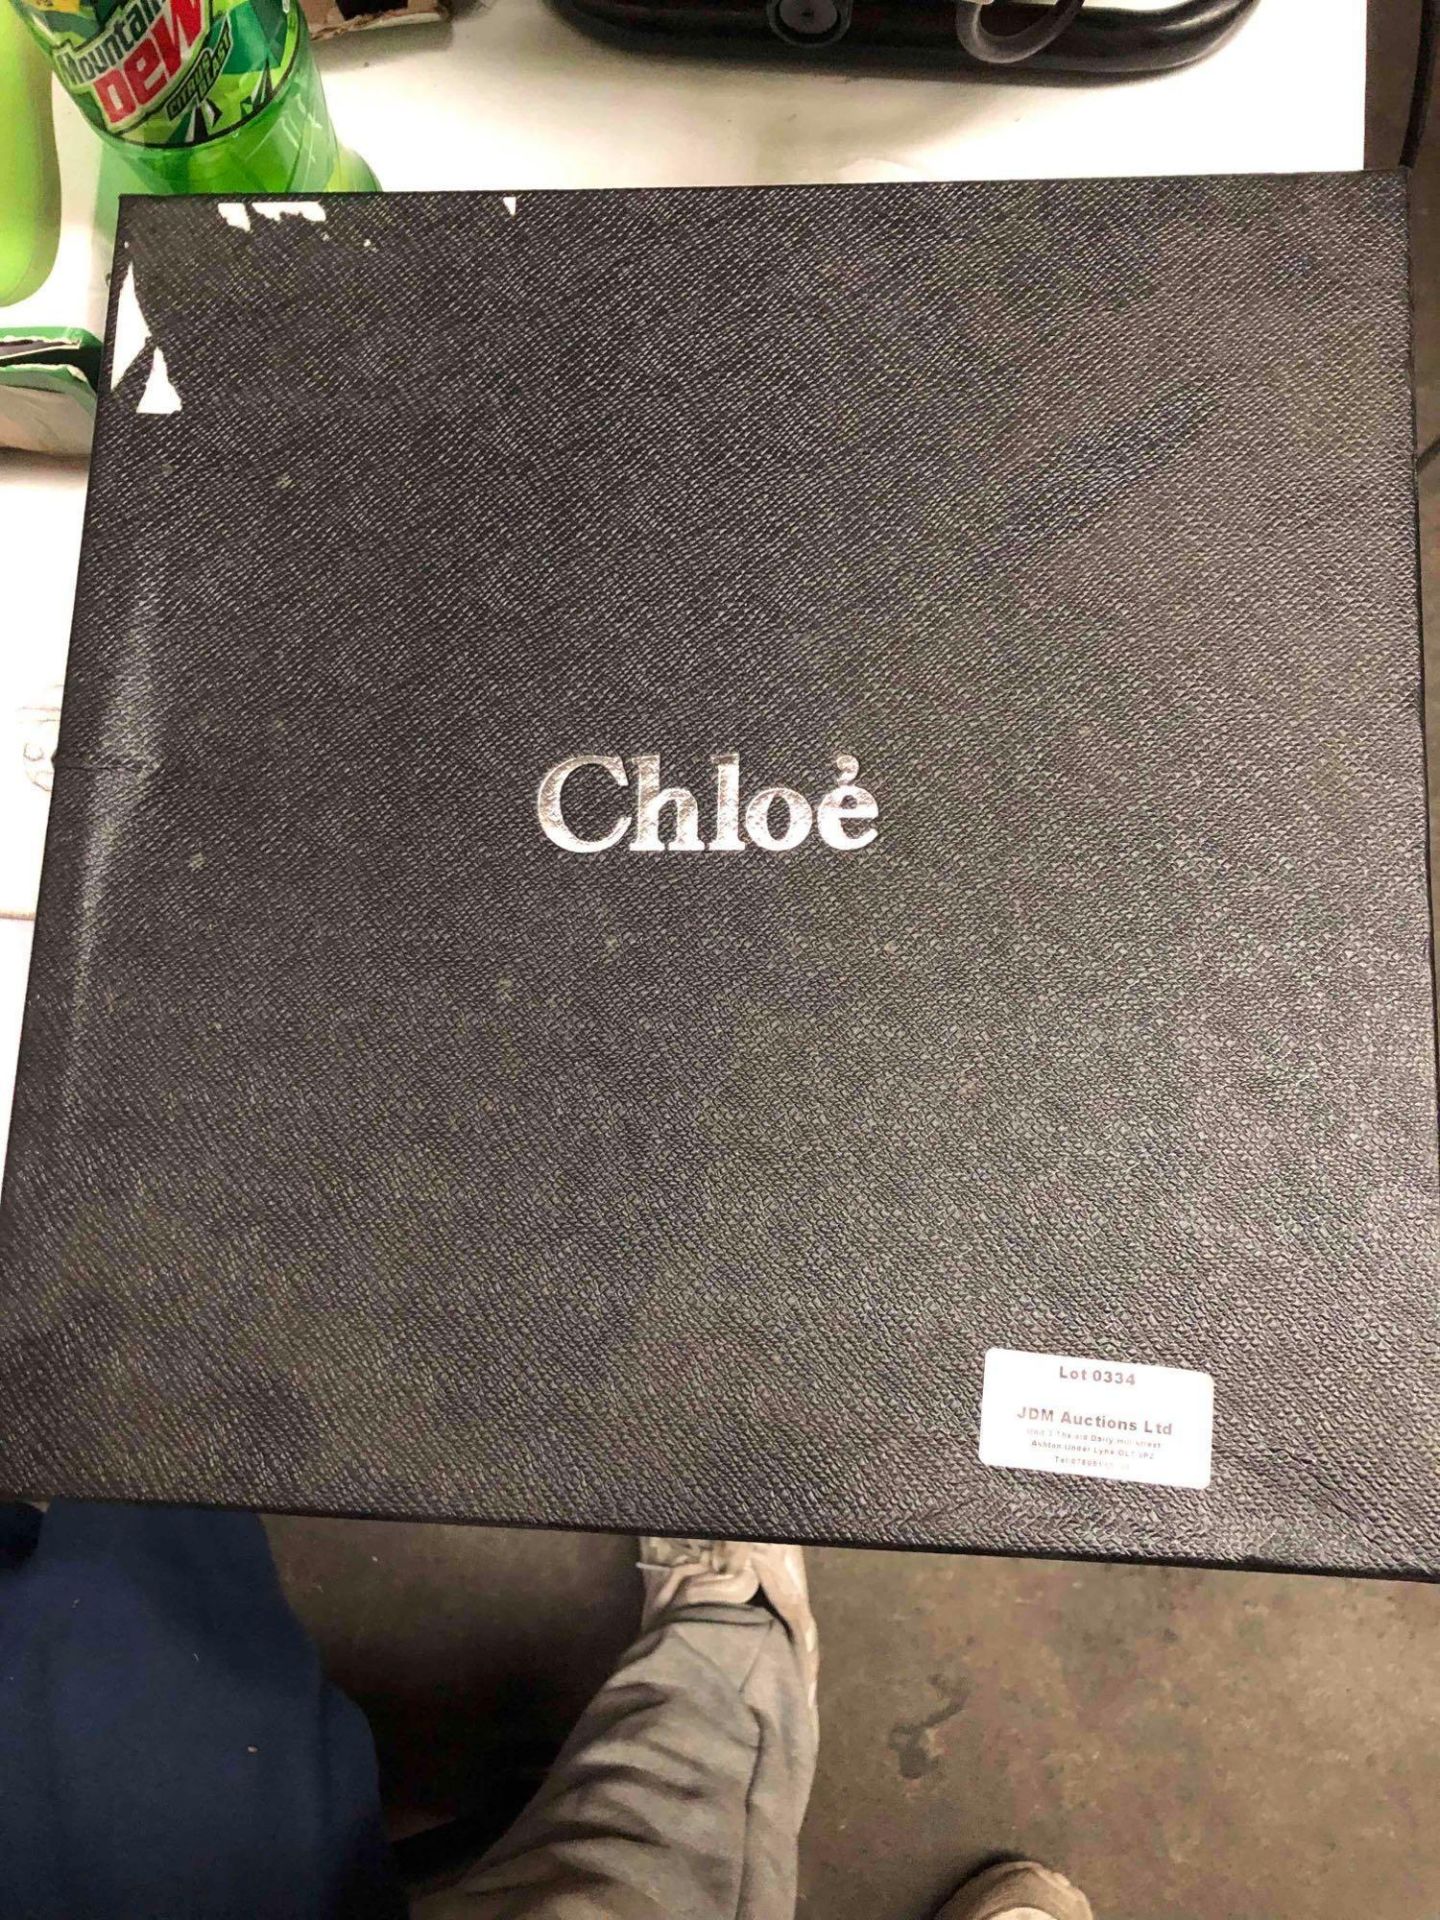 boxed Chloe handbag RRP £24.99 - Image 3 of 3